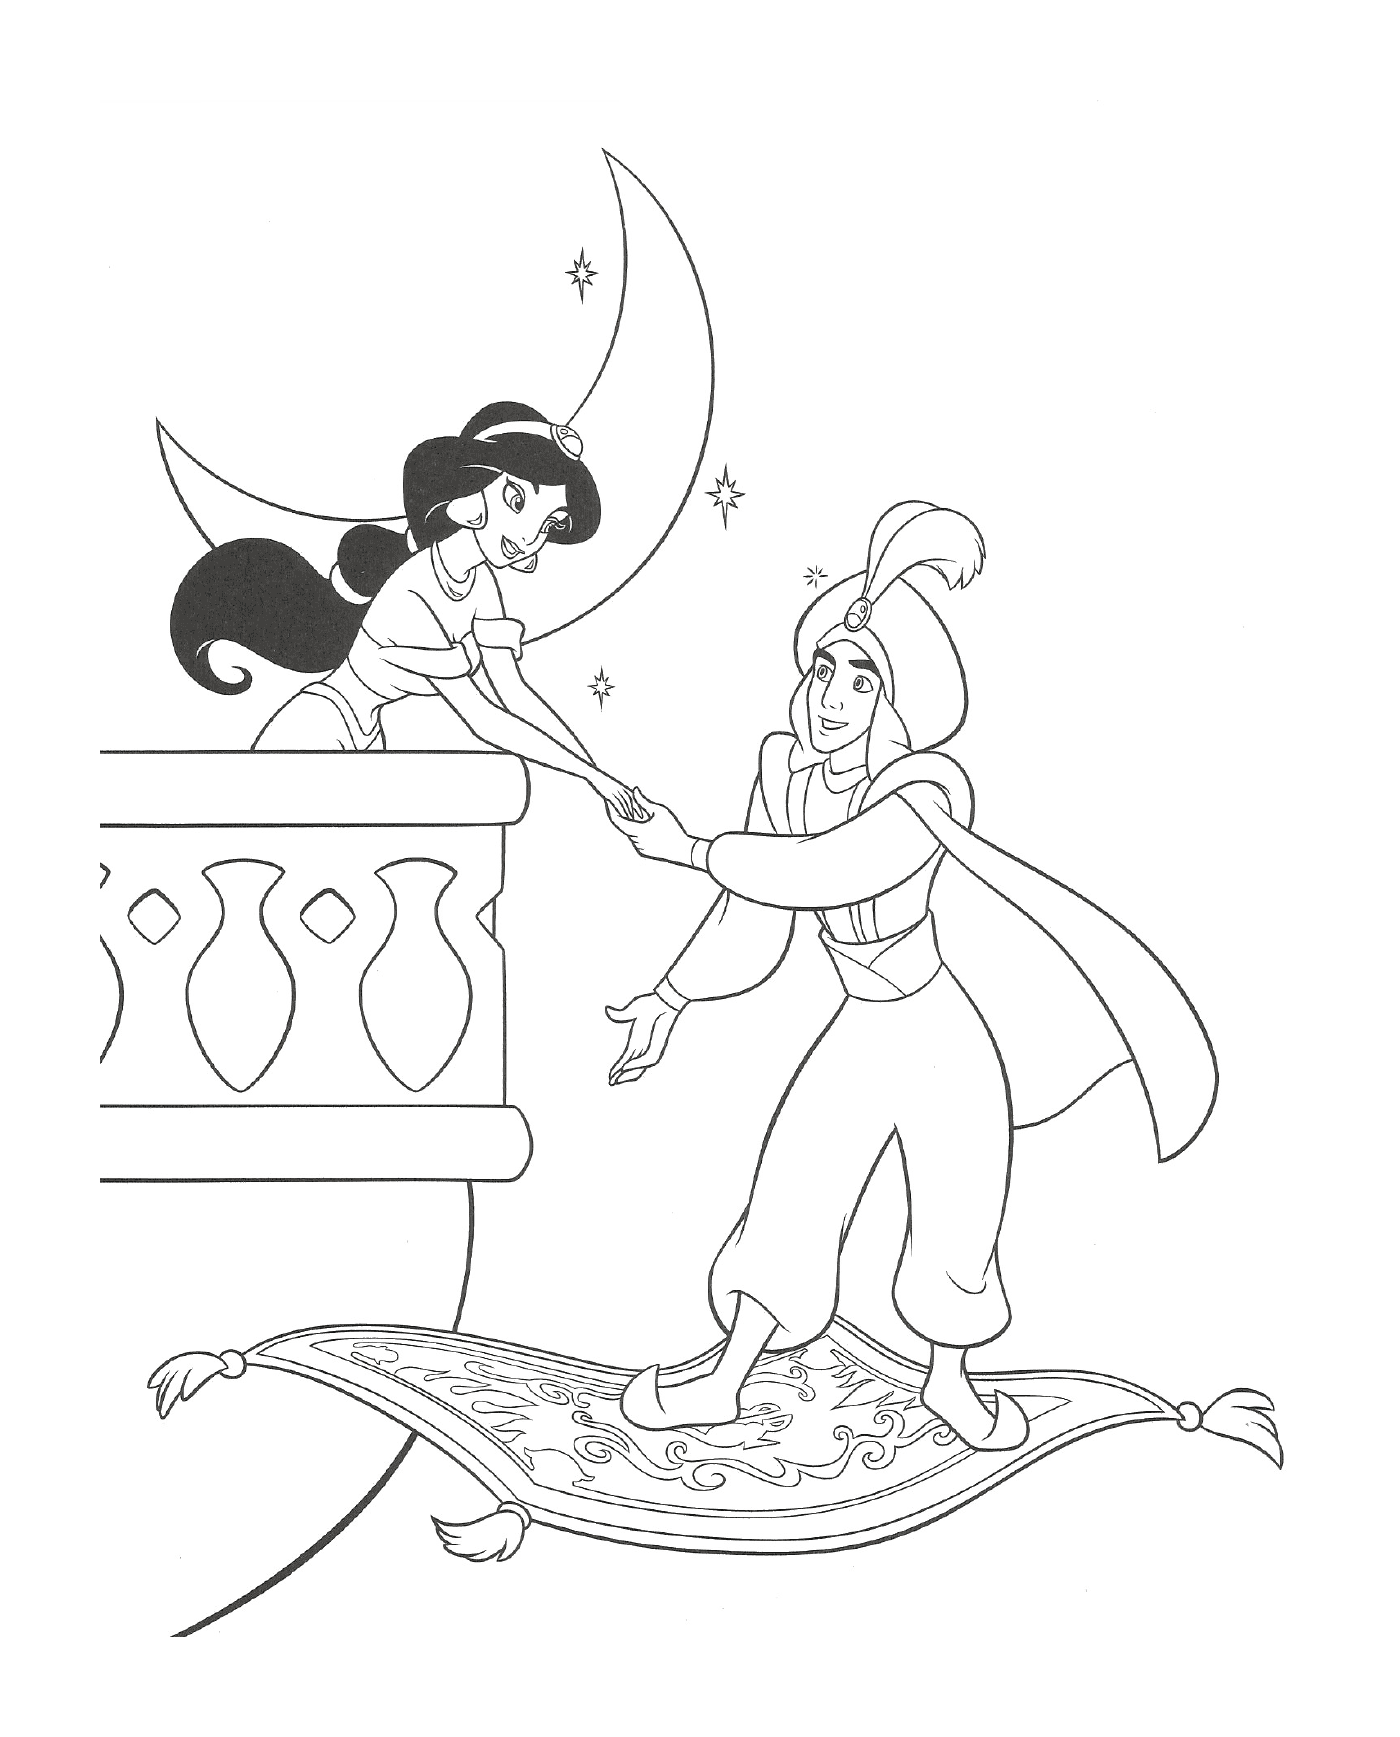 Aladin vient chercher Princesse JAsmine